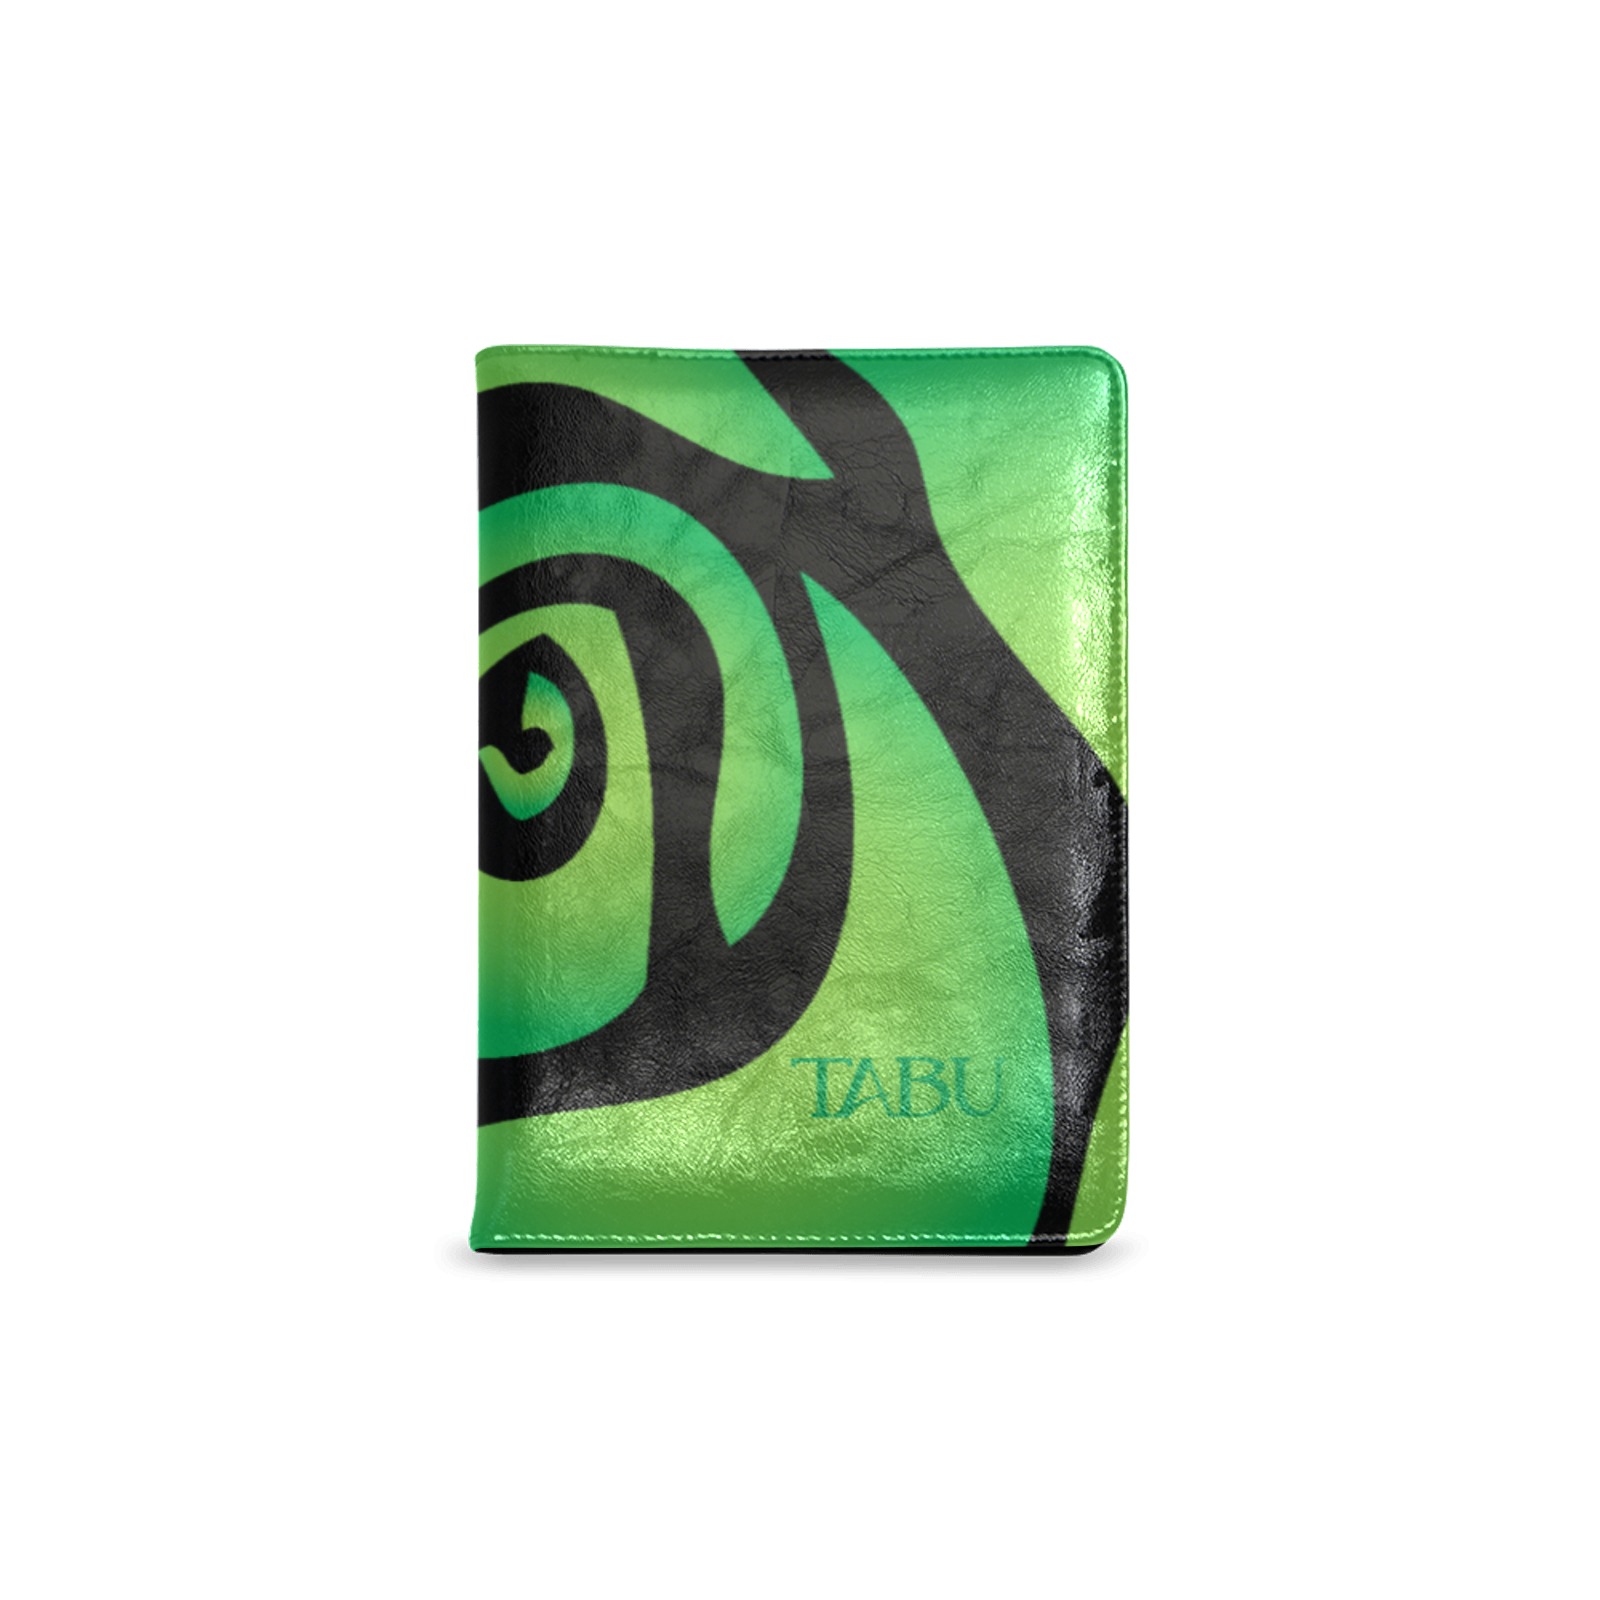 TABU Green ROSE Custom NoteBook A5